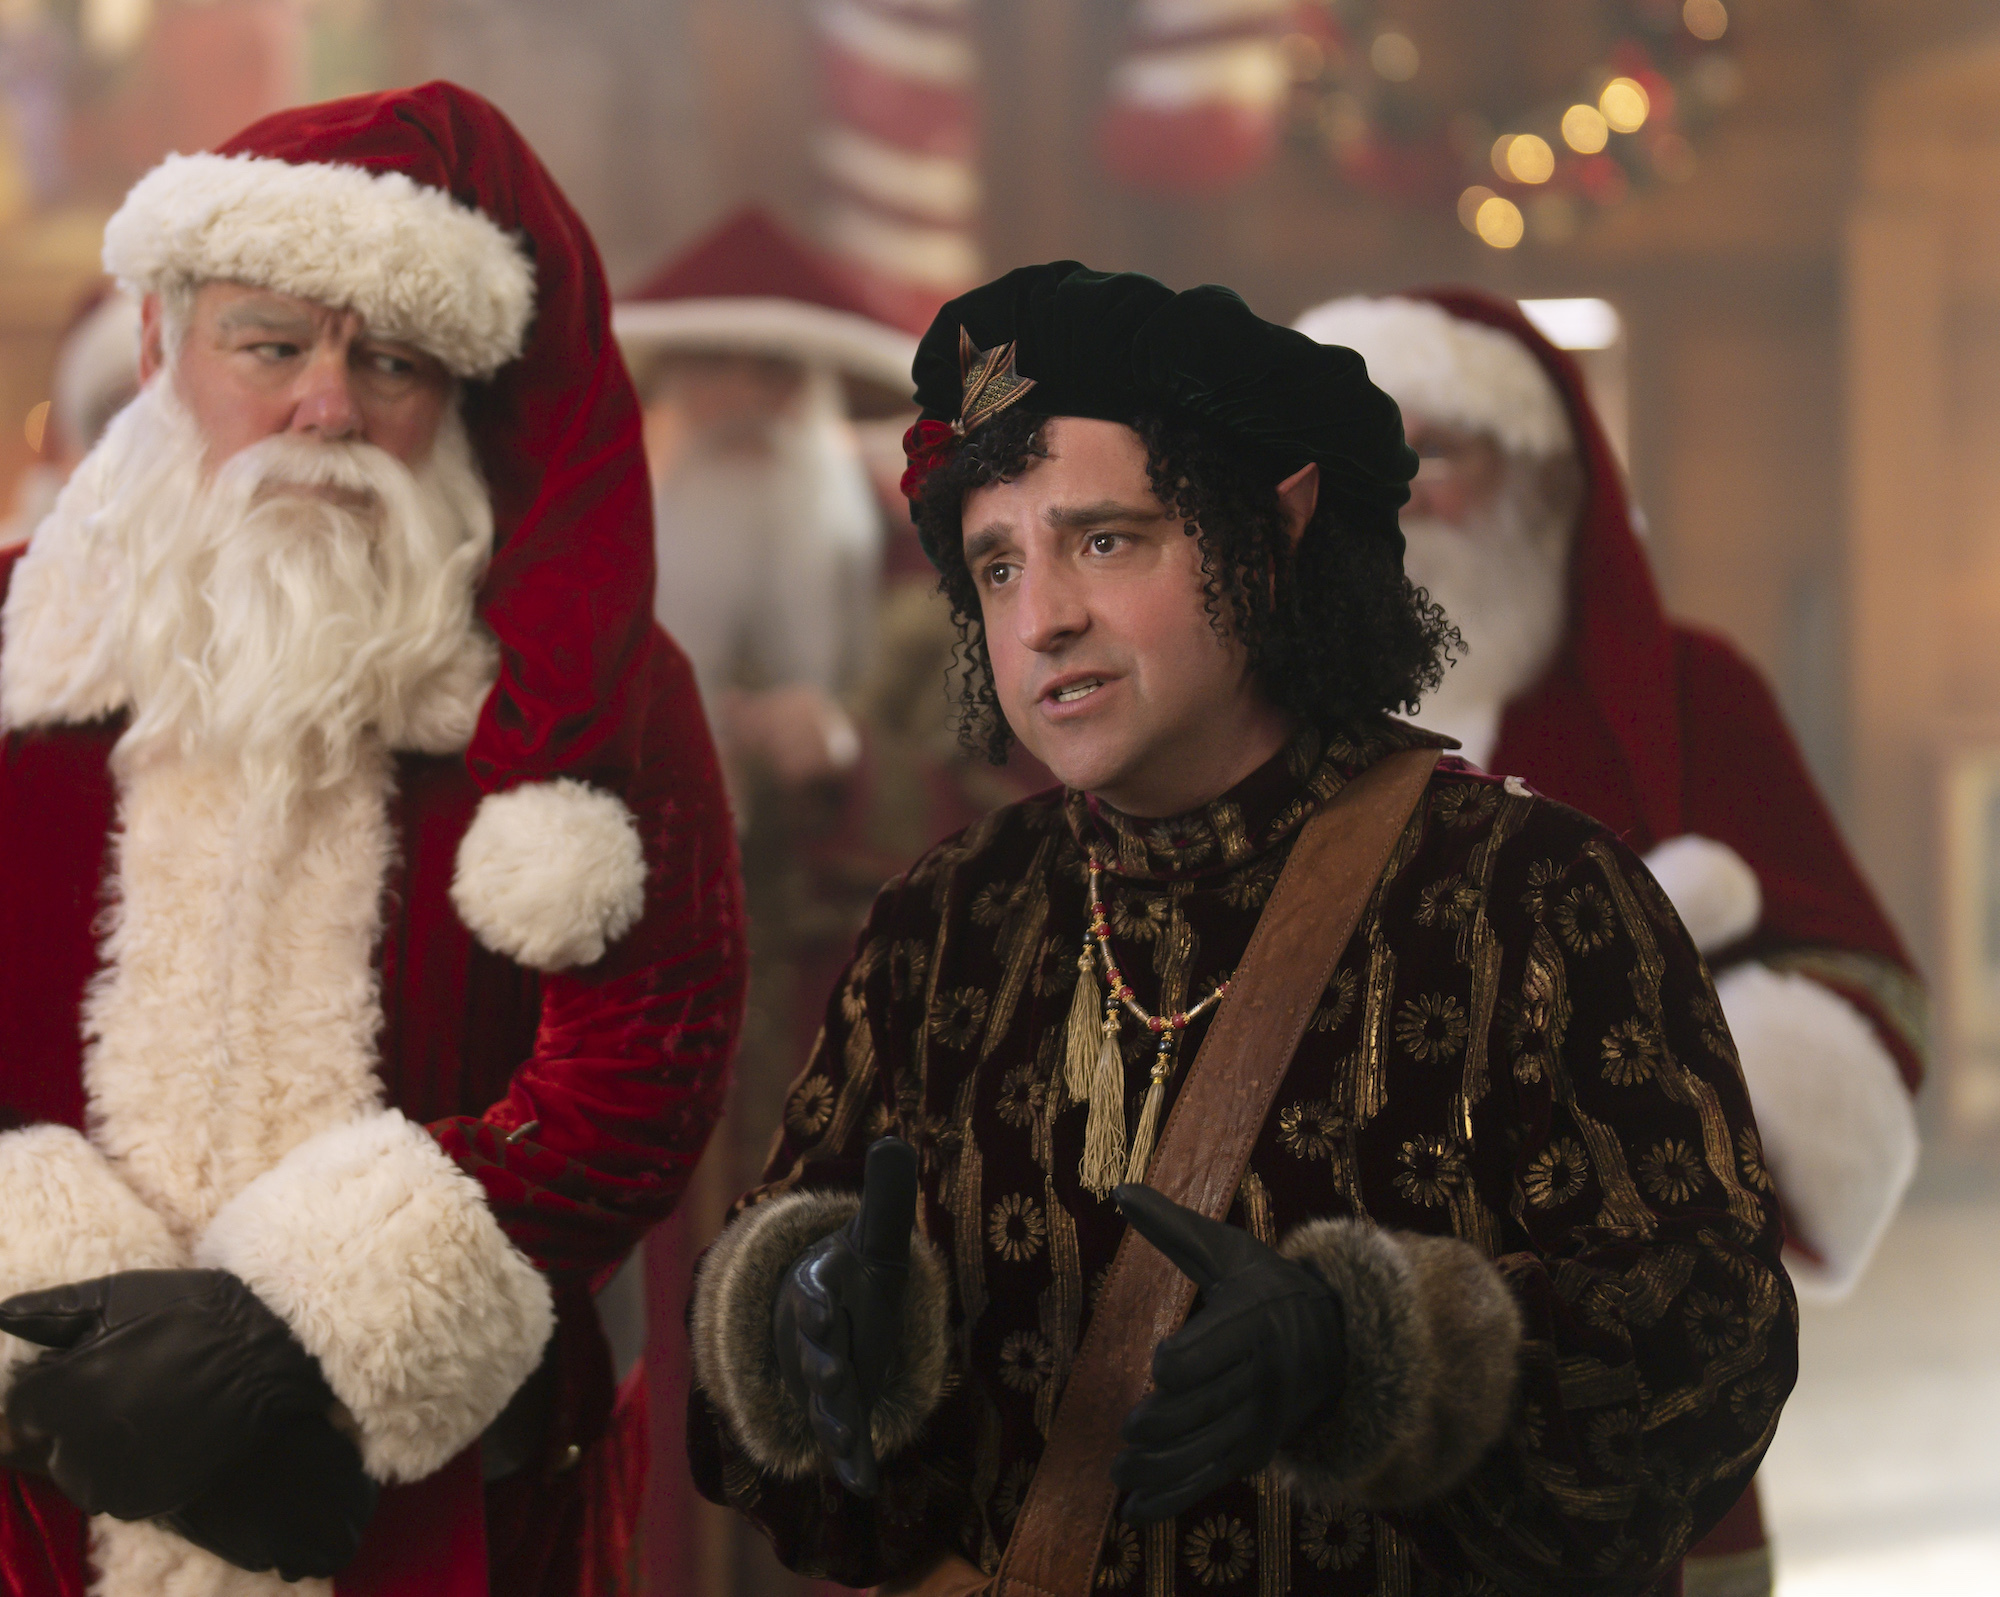 Jim O'Heir and David Krumholtz in episode 5 of 'The Santa Clauses' (Courtesy of Disney/James Clark)